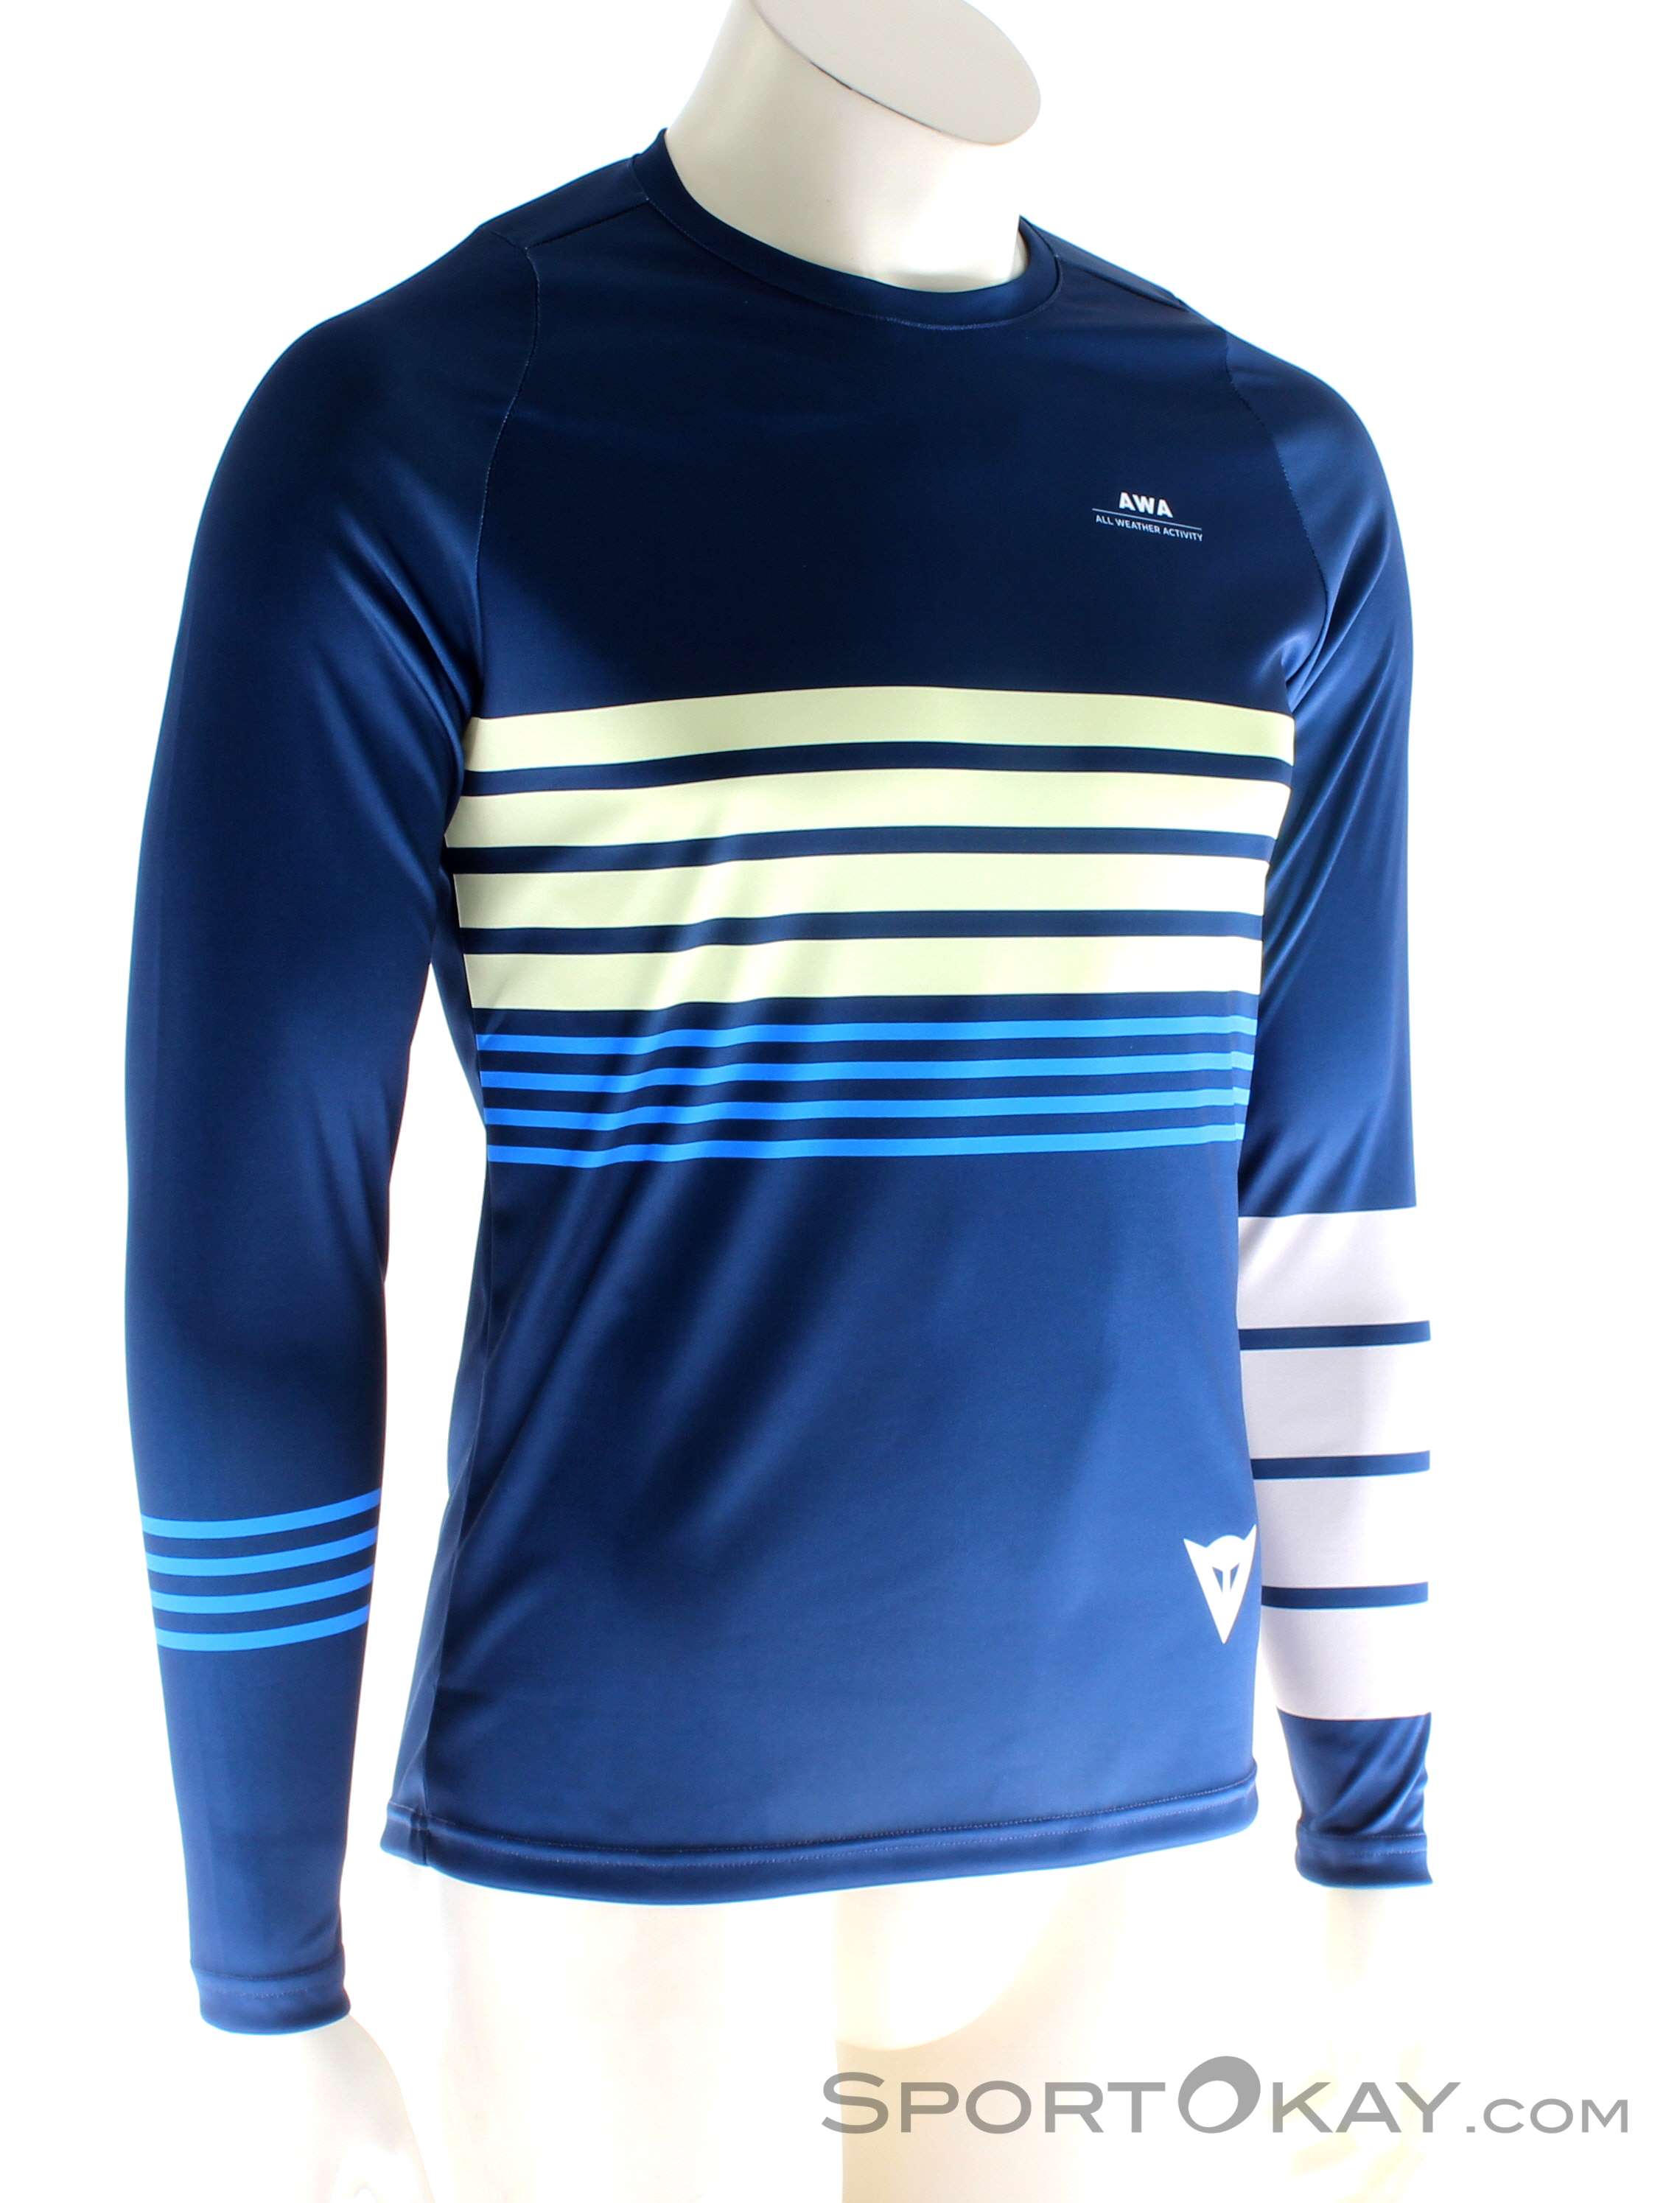 Dainese AWA Jersey 2 LS Maglia da Bici - T-Shirt \u0026 magliette -  Abbigliamento da ciclismo - Bike - Tutti